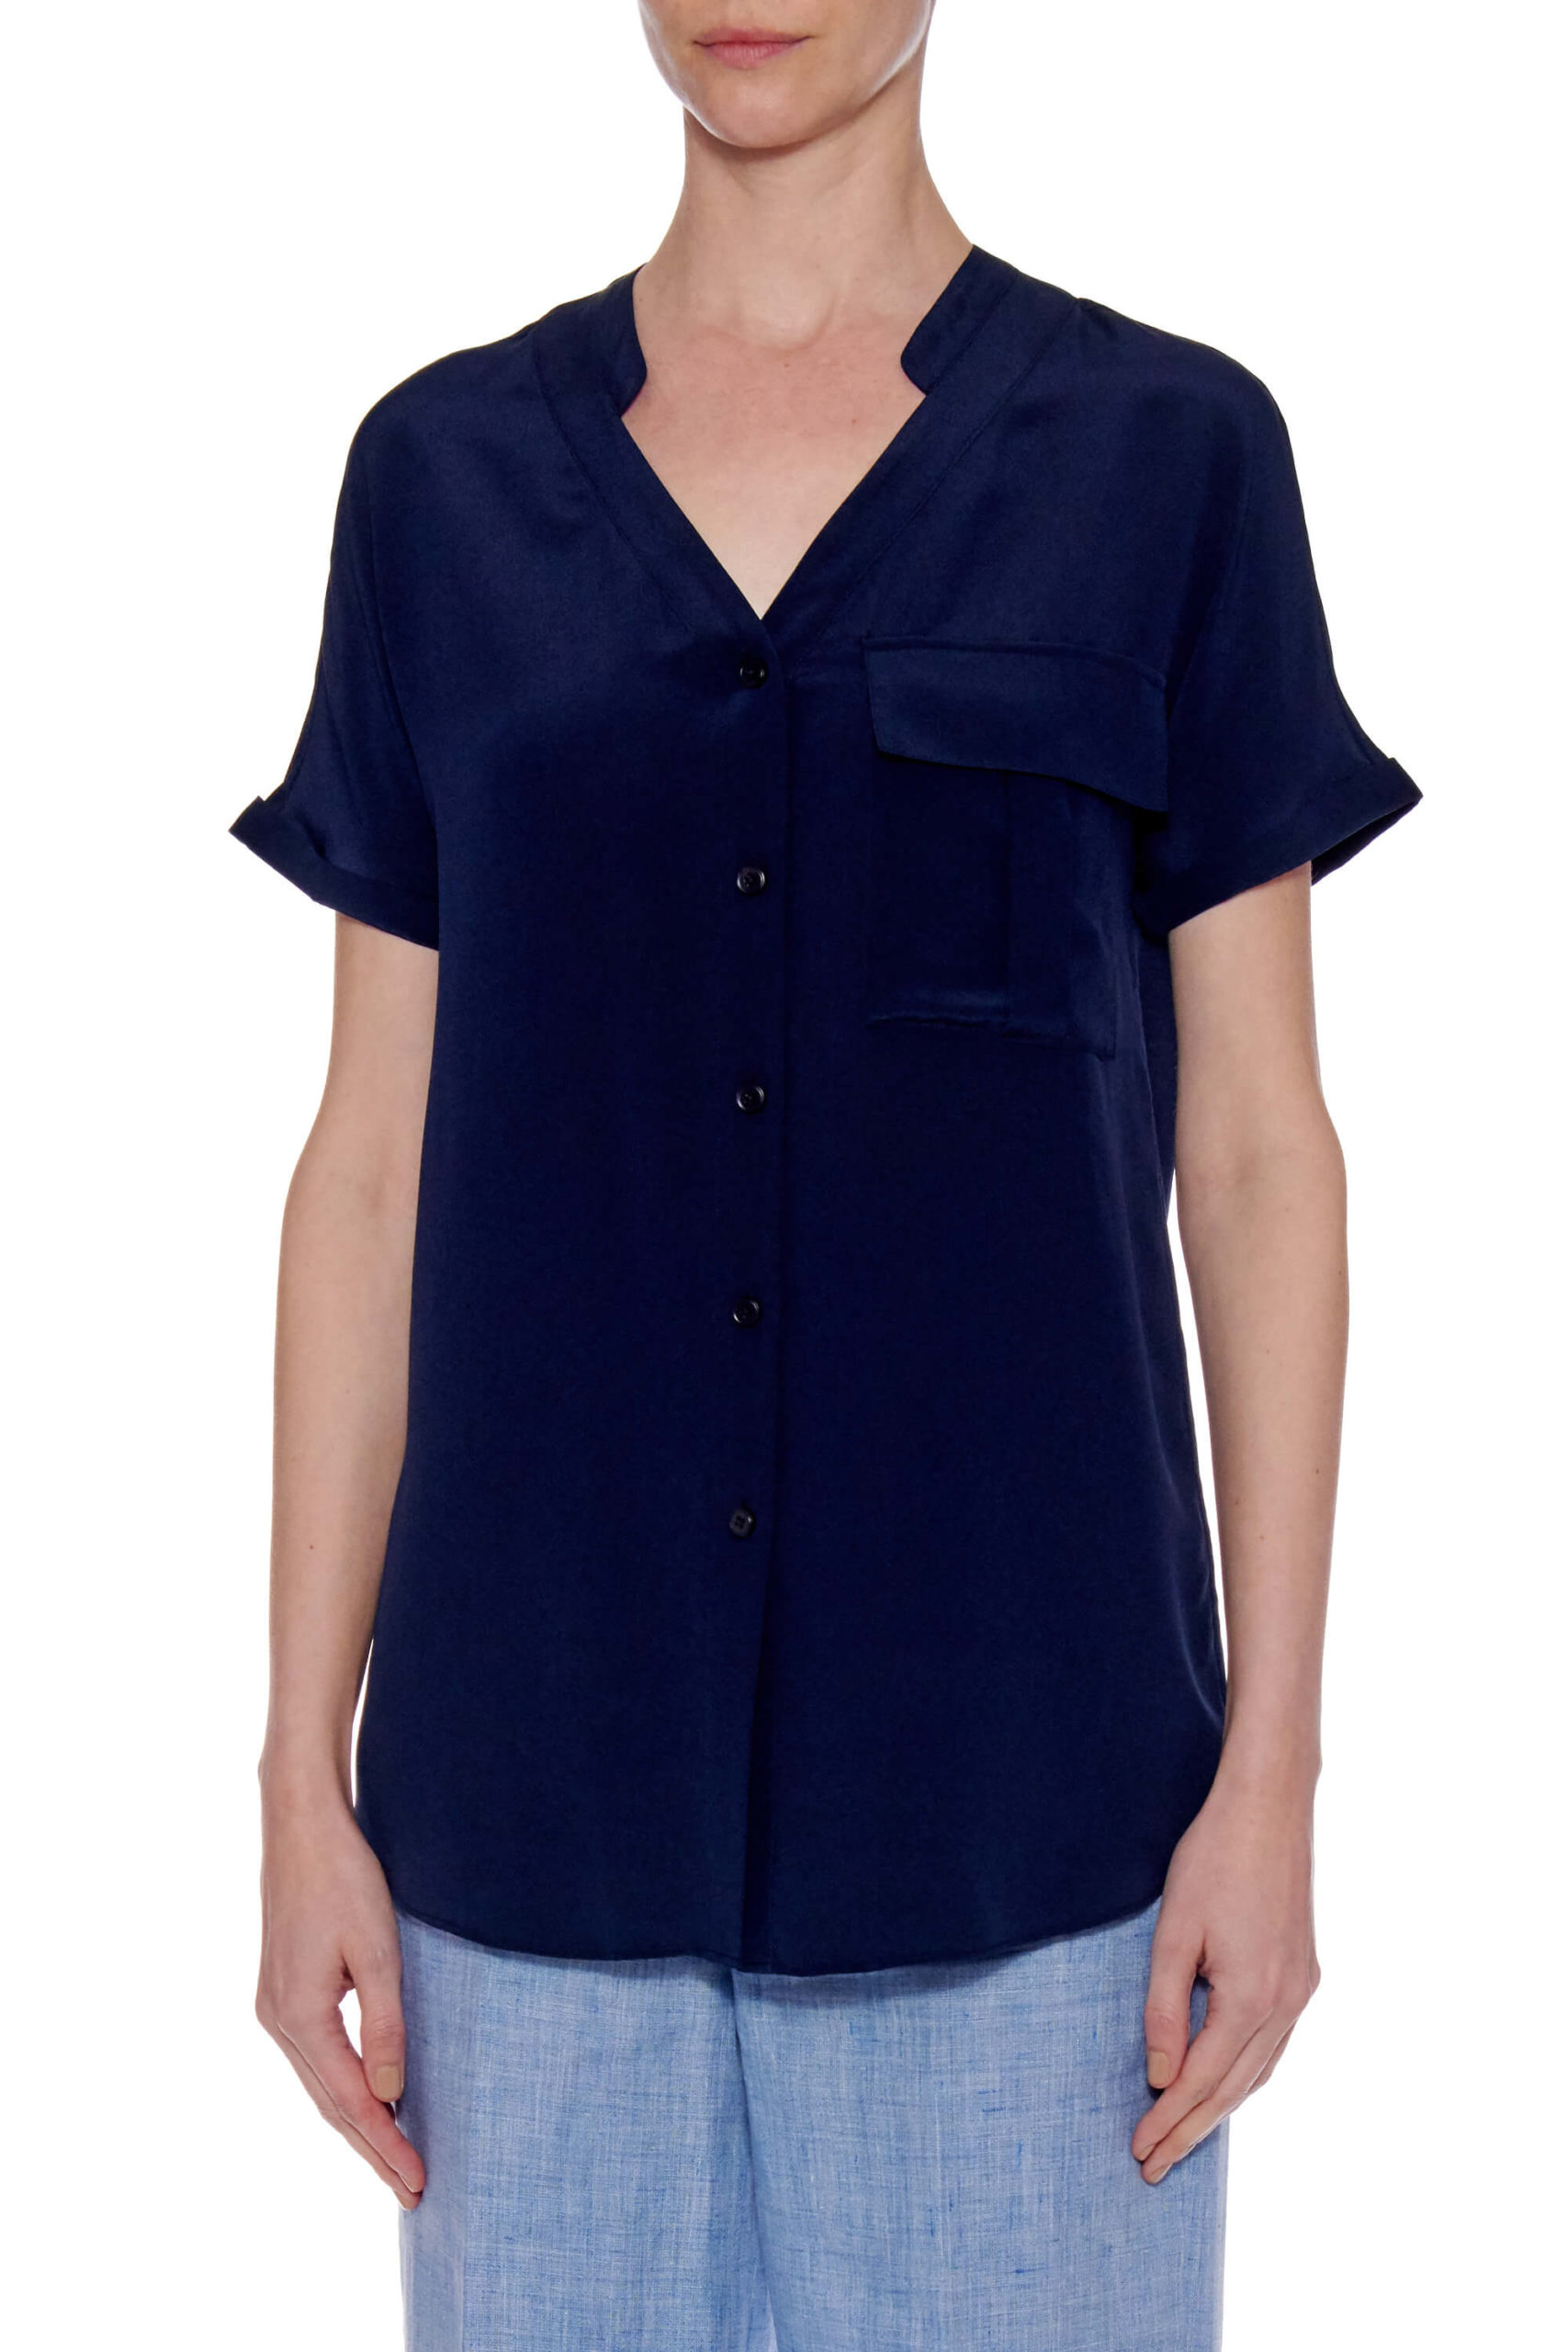 Lleida Top – Short sleeve loose fit summer blouse in navy0